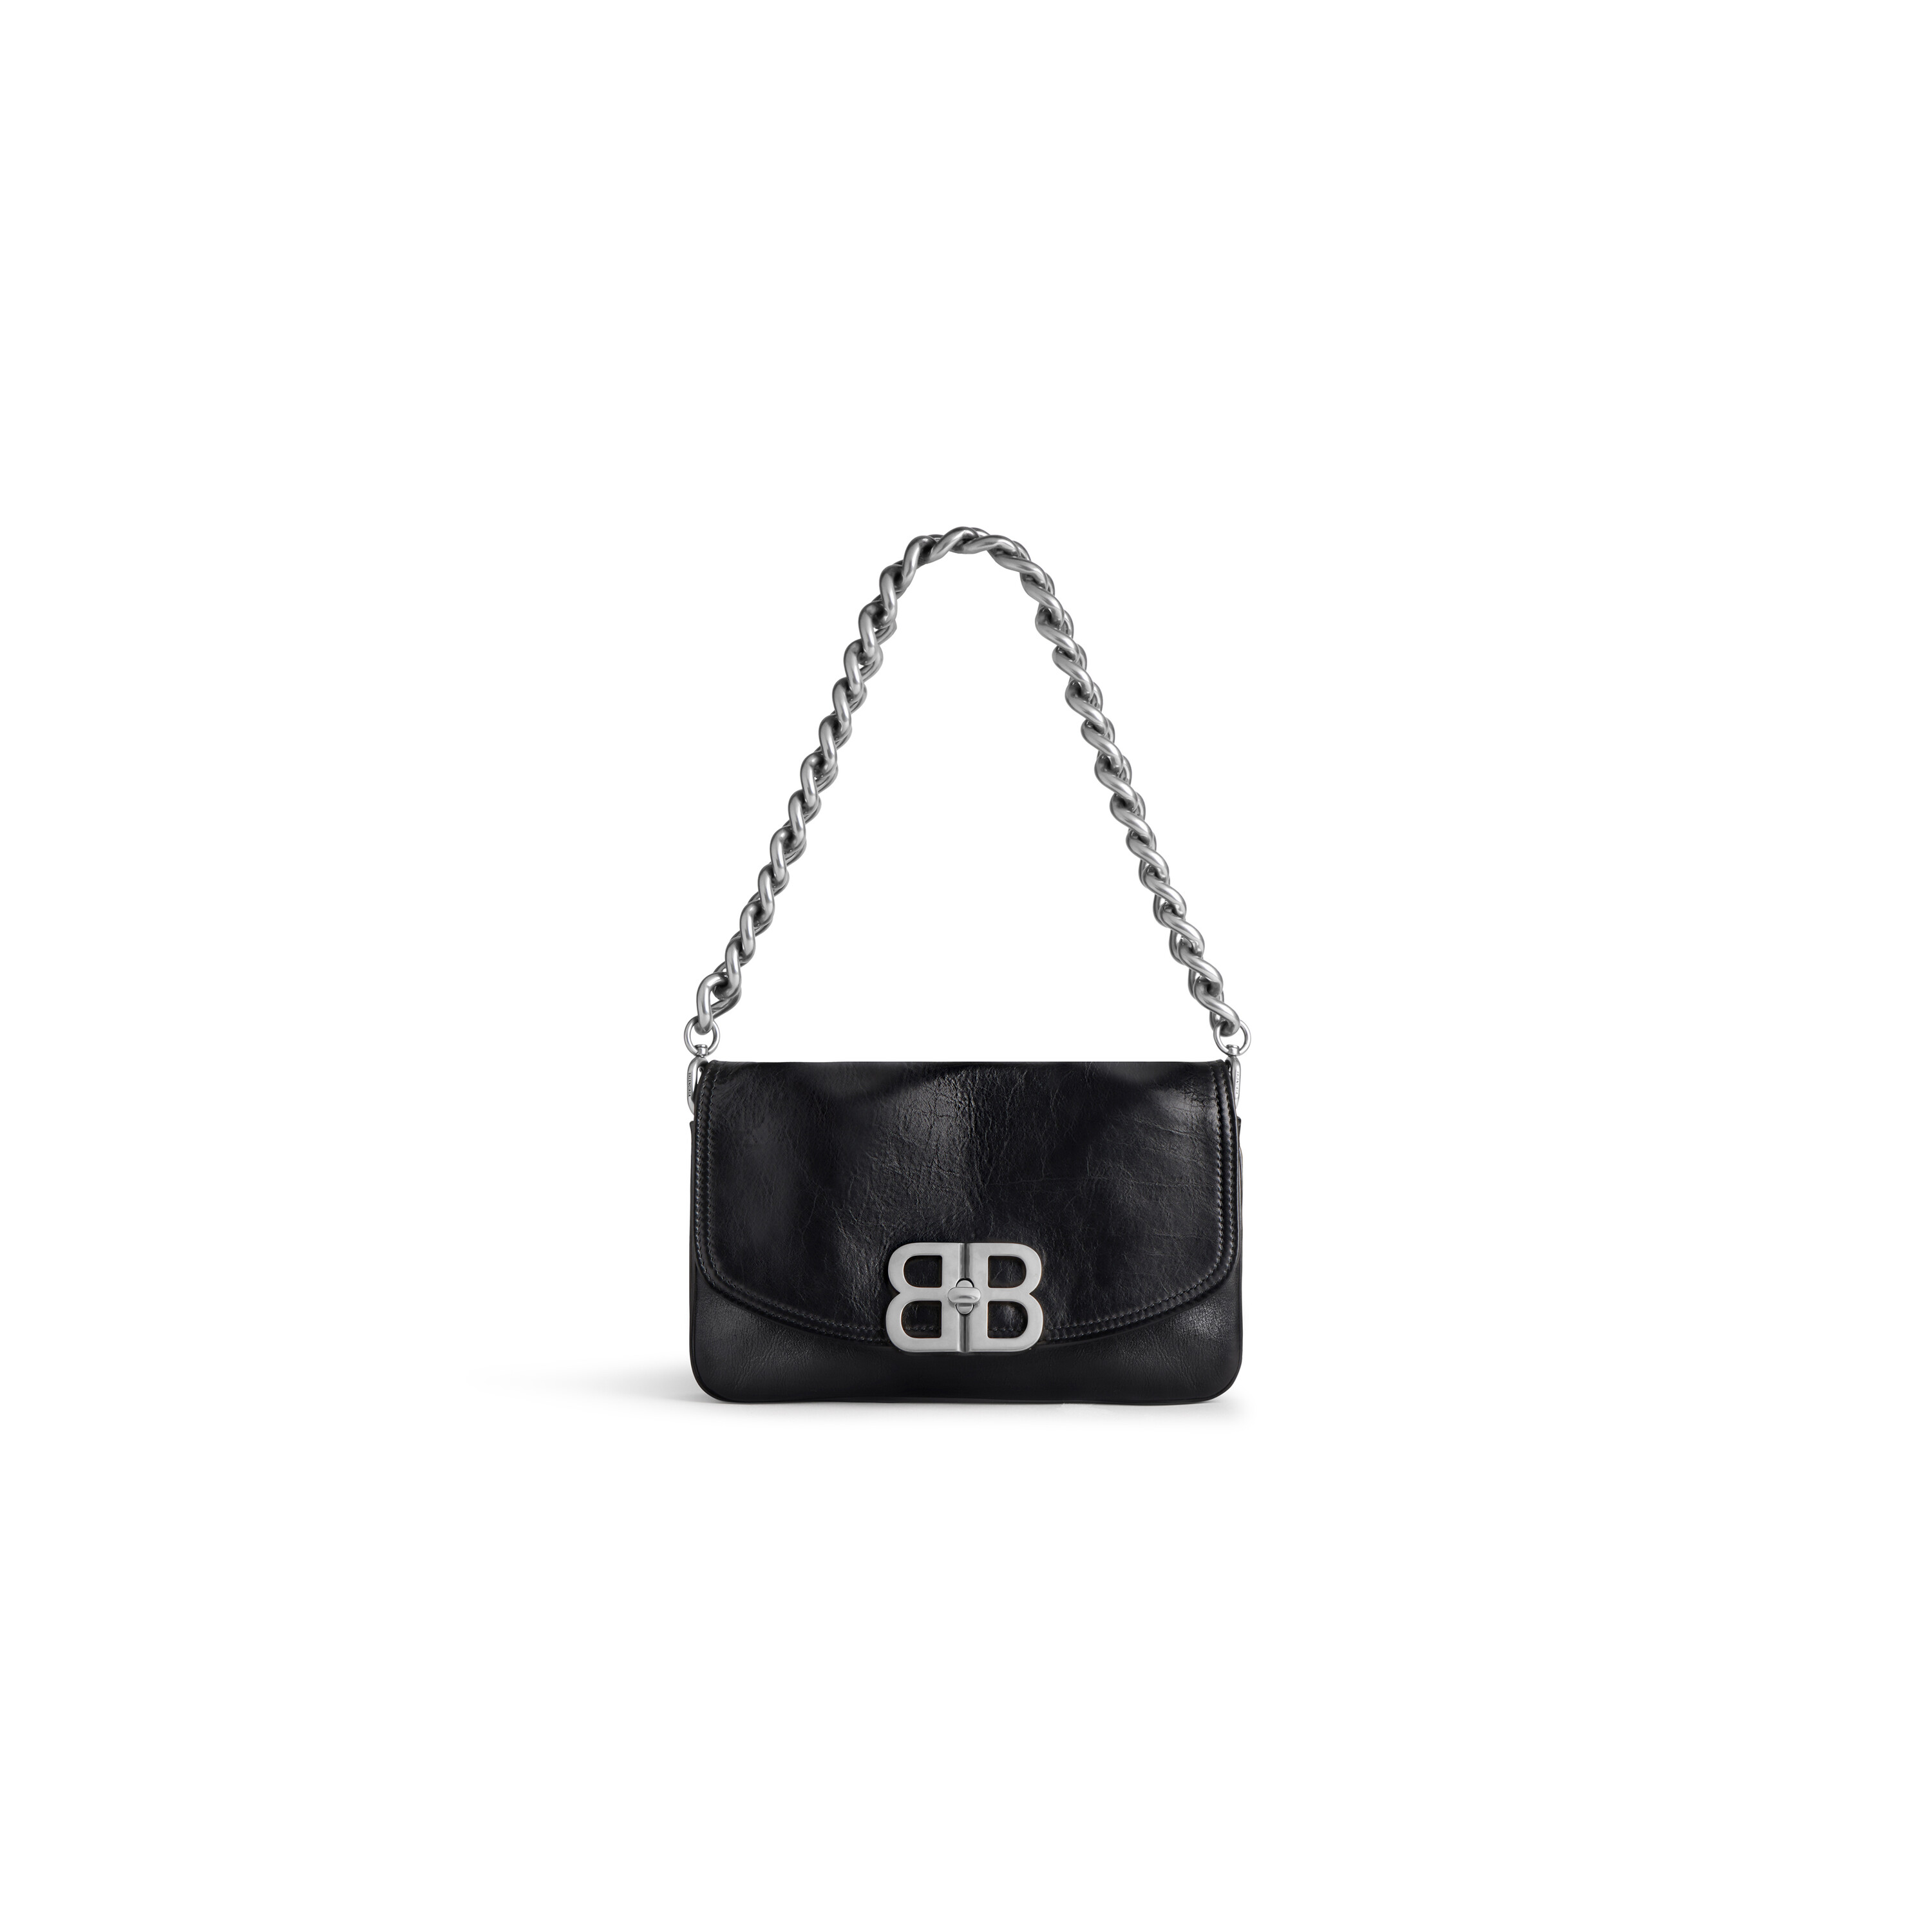 Balenciaga Bb Soft Small Leather Handbag - ShopStyle Shoulder Bags